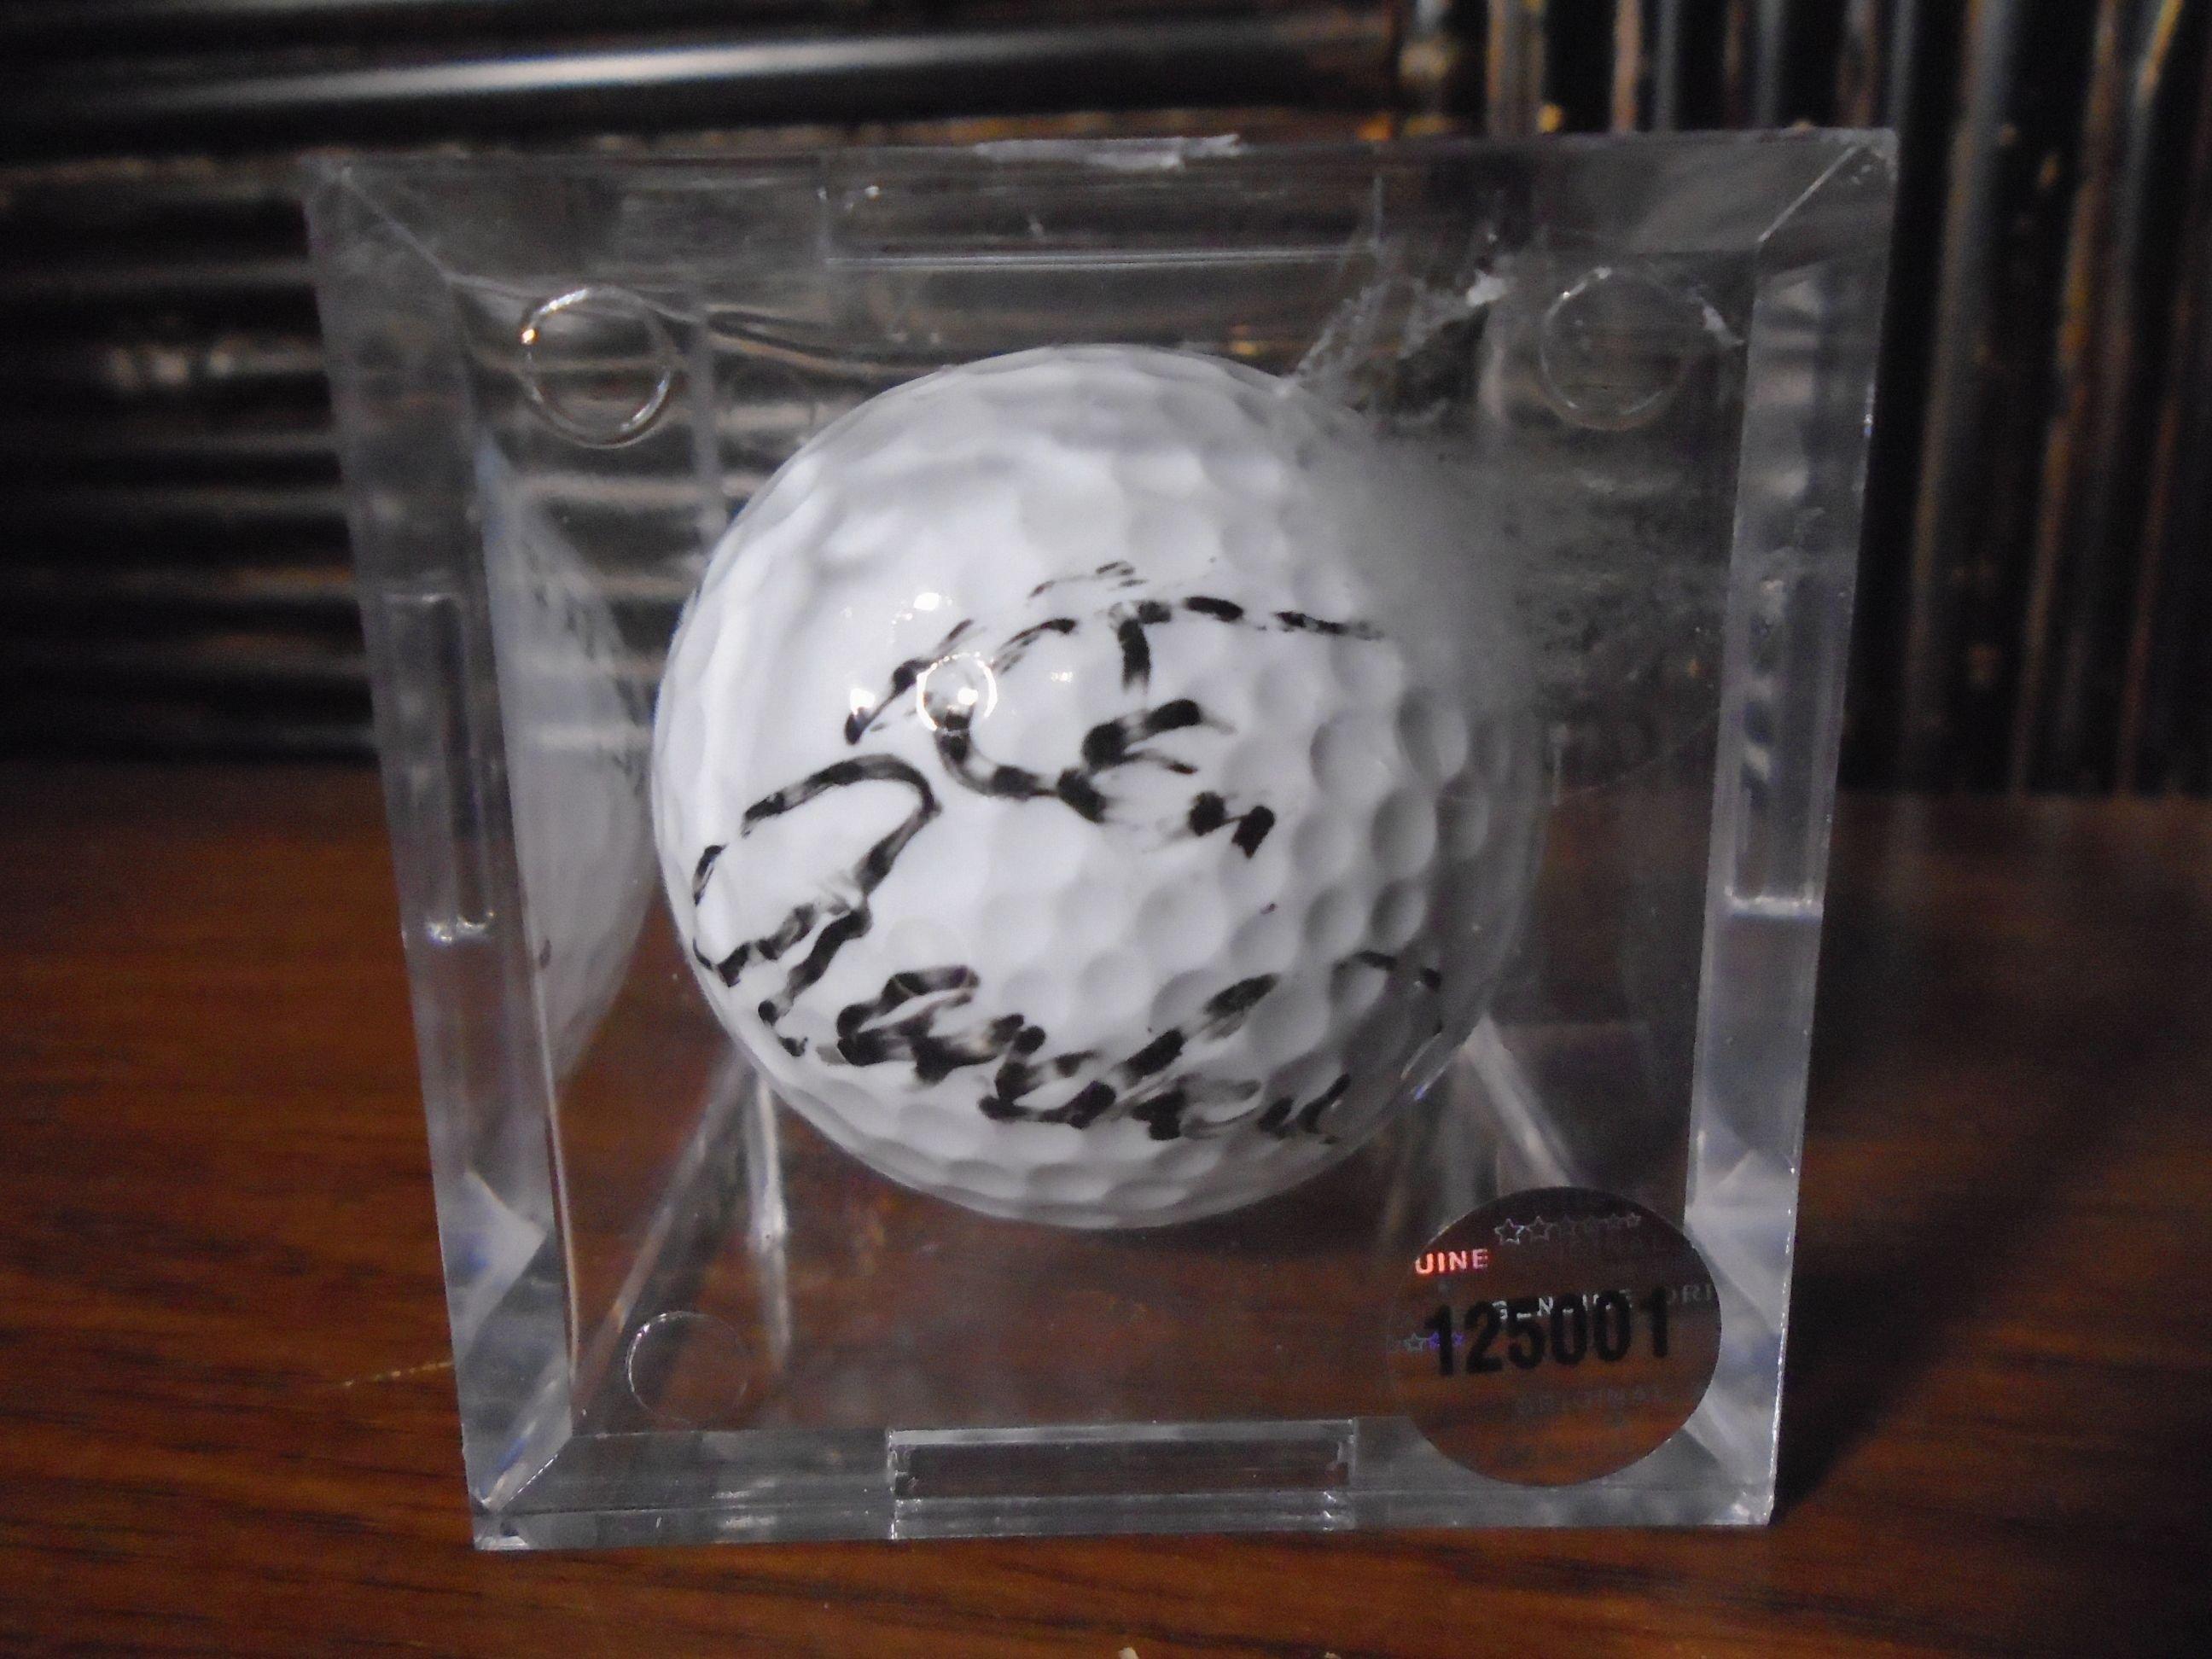 Ben Crenshaw Autographed Golf Ball.